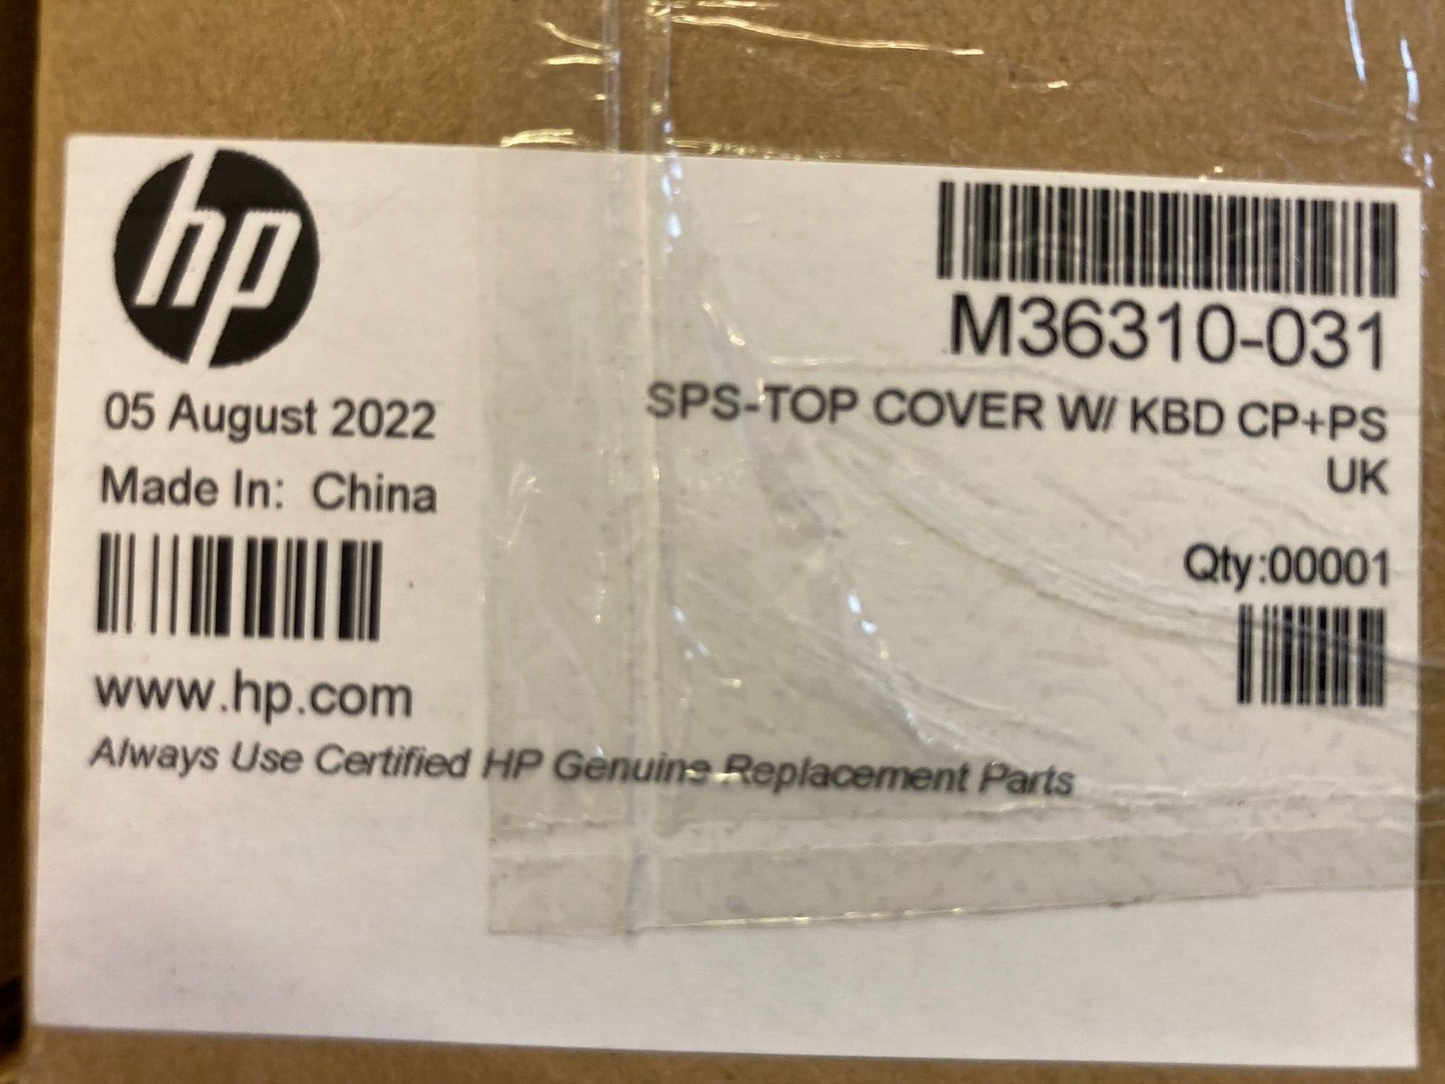 NEW Genuine HP M36310-031 ELITEBOOK 840 G8 TOP COVER WITH UK KEYBOARD